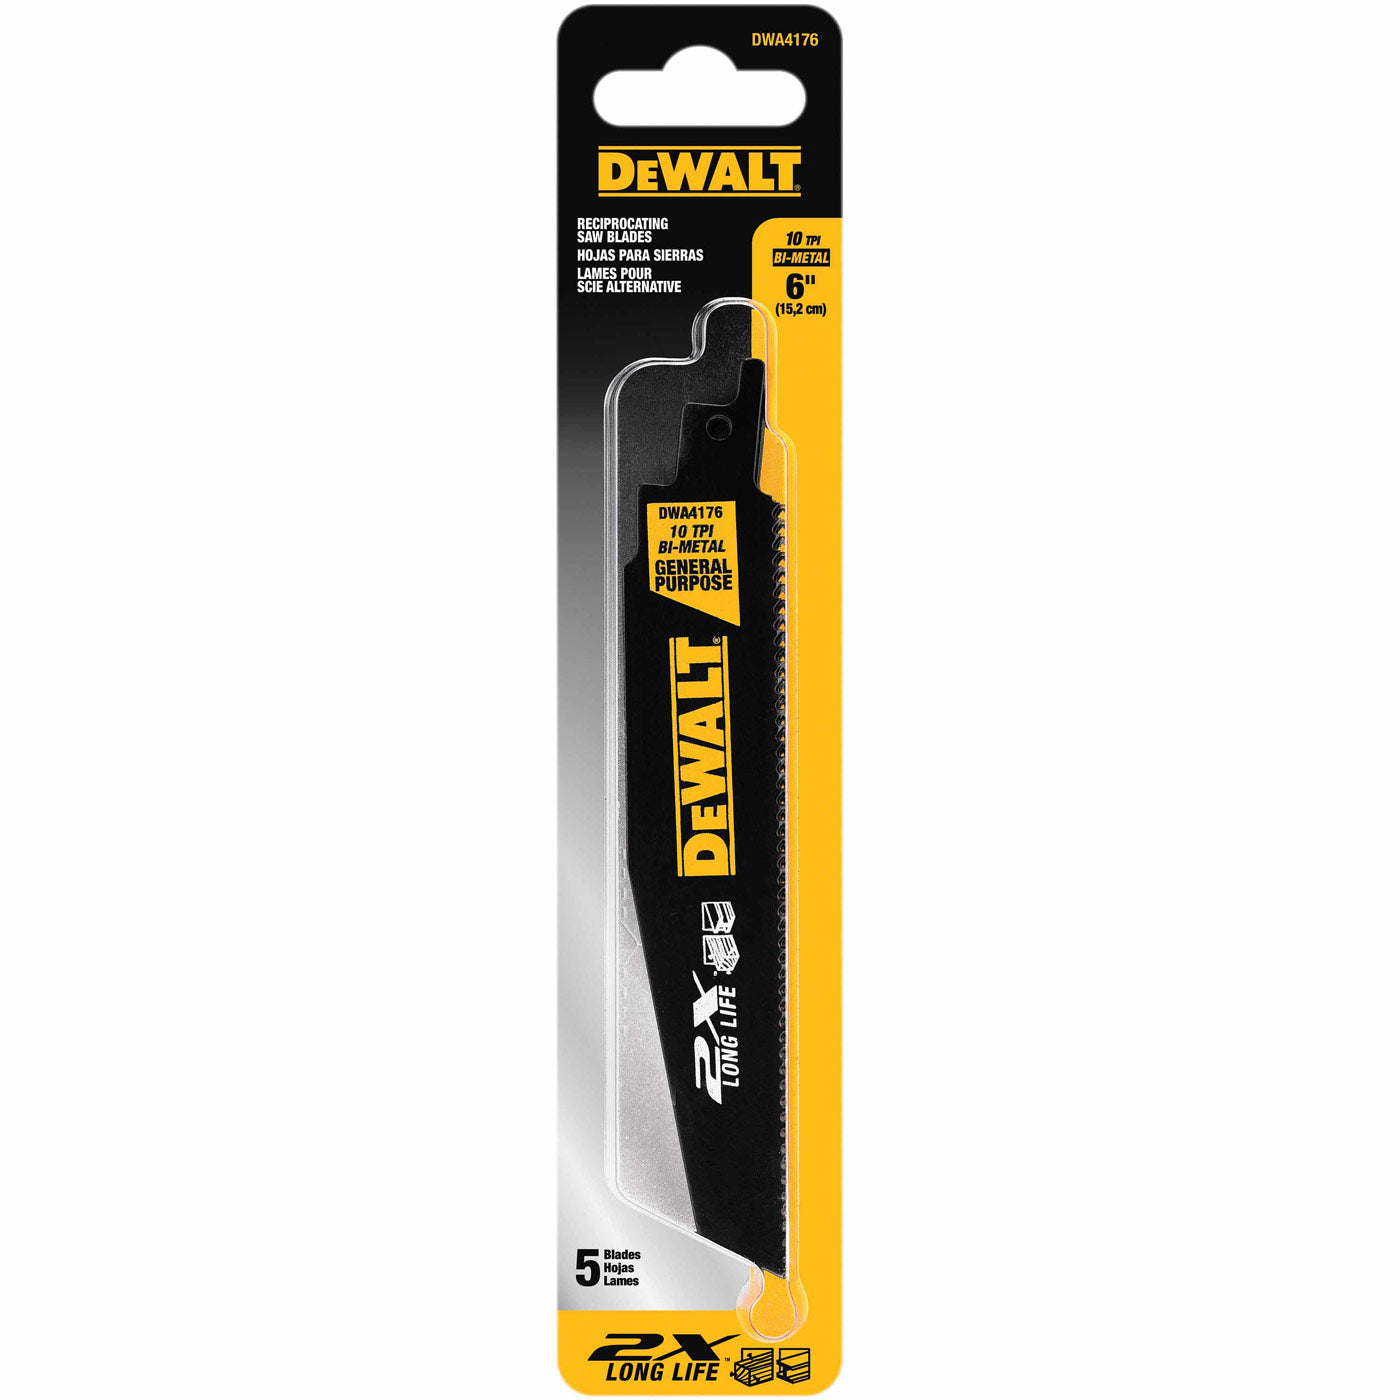 DeWalt DWA4176 6" 10TPI 2X Reciprocating Saw Blade 5 Pack